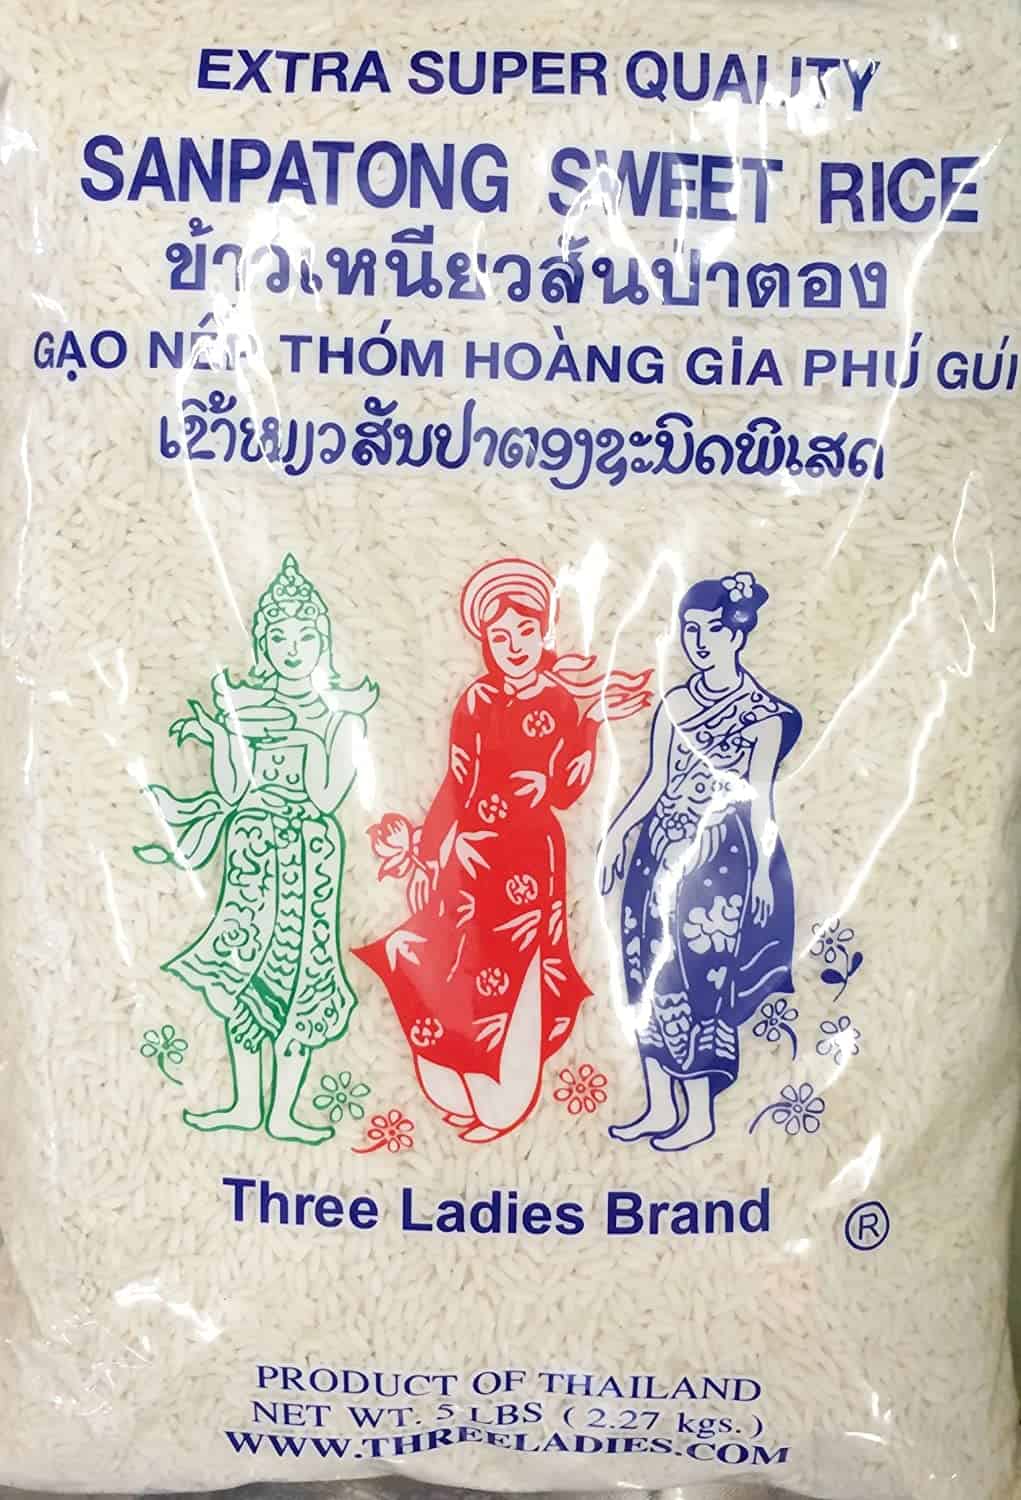 Reis grawn hir gorau: Three Ladies Brand Sanpatong Sweet Reis